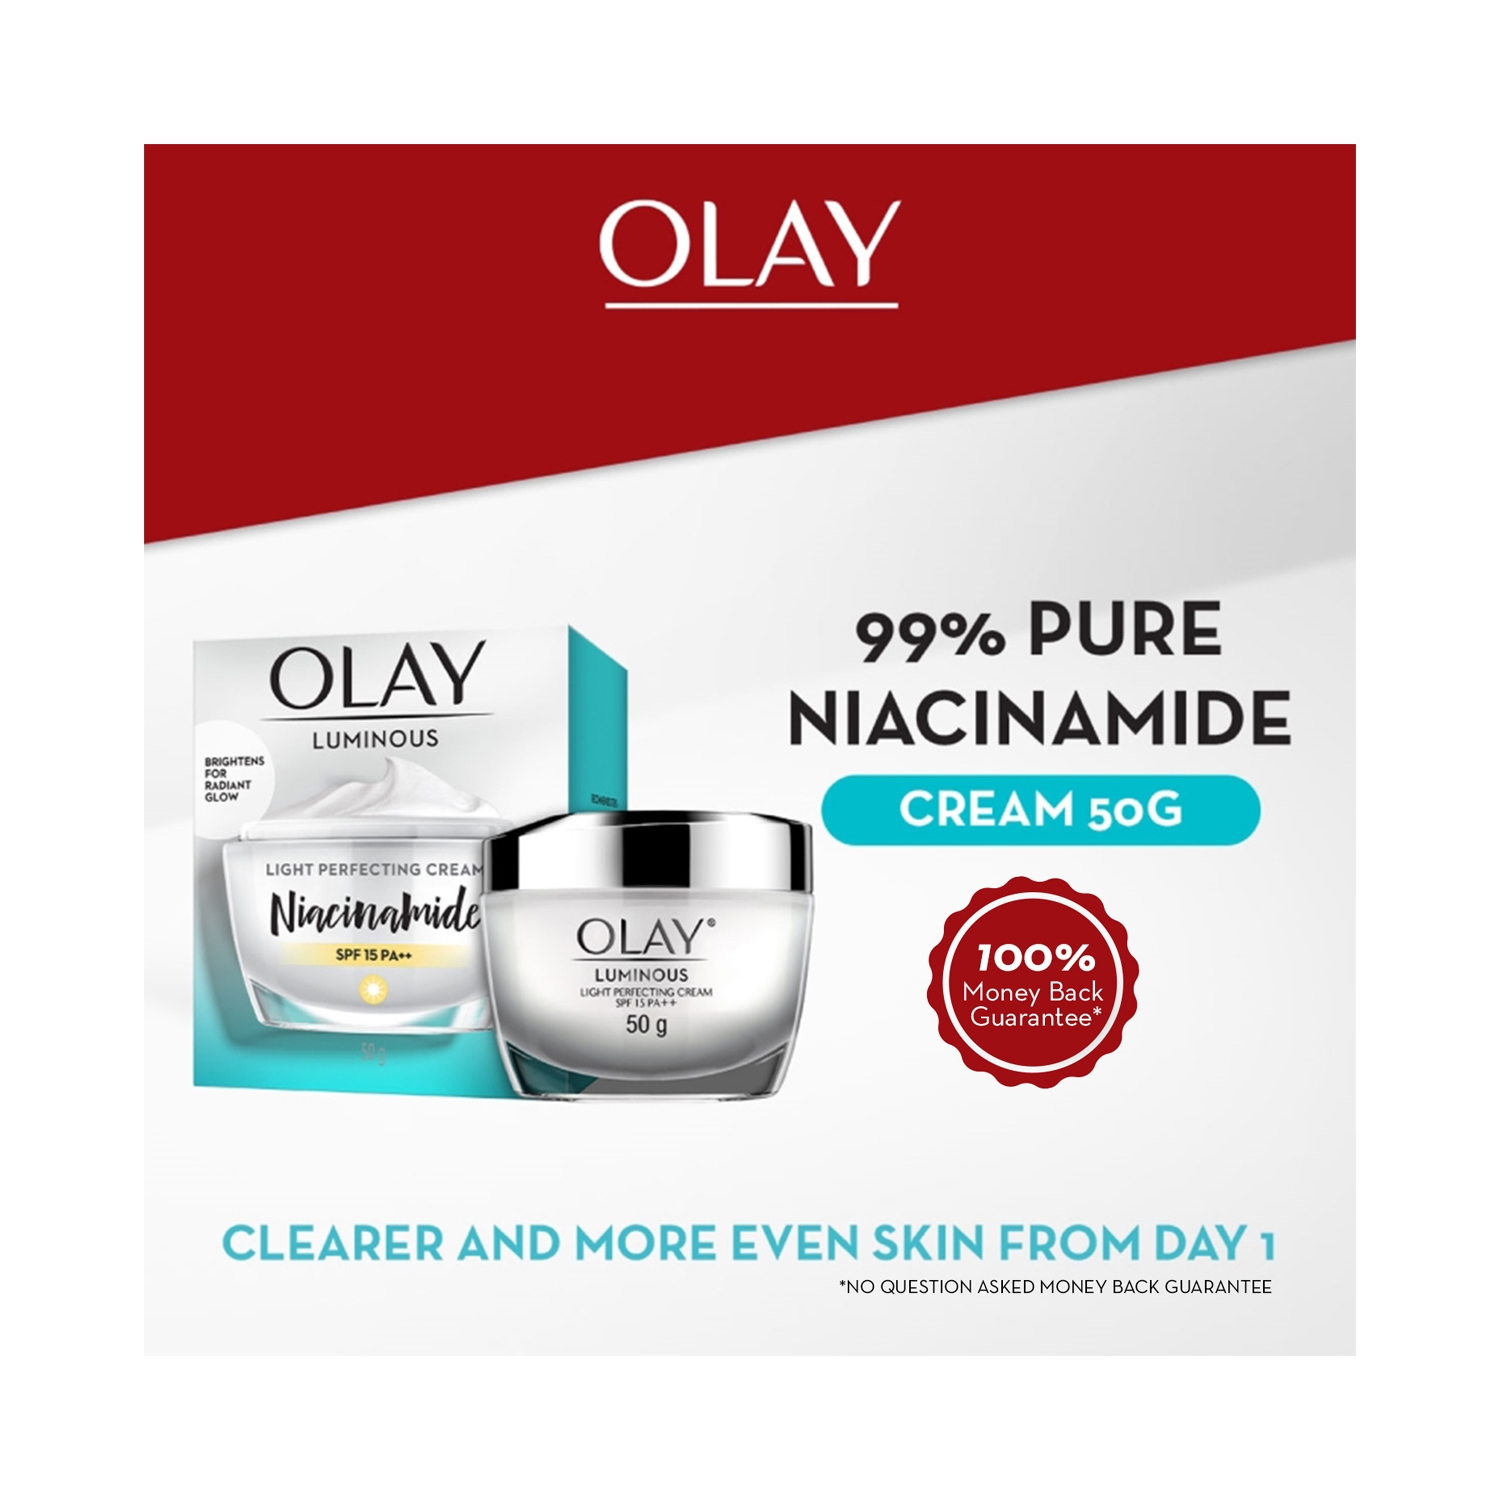 Olay | Olay 99% Pure Niacinamide Cream with SPF 15 PA++ (50g)